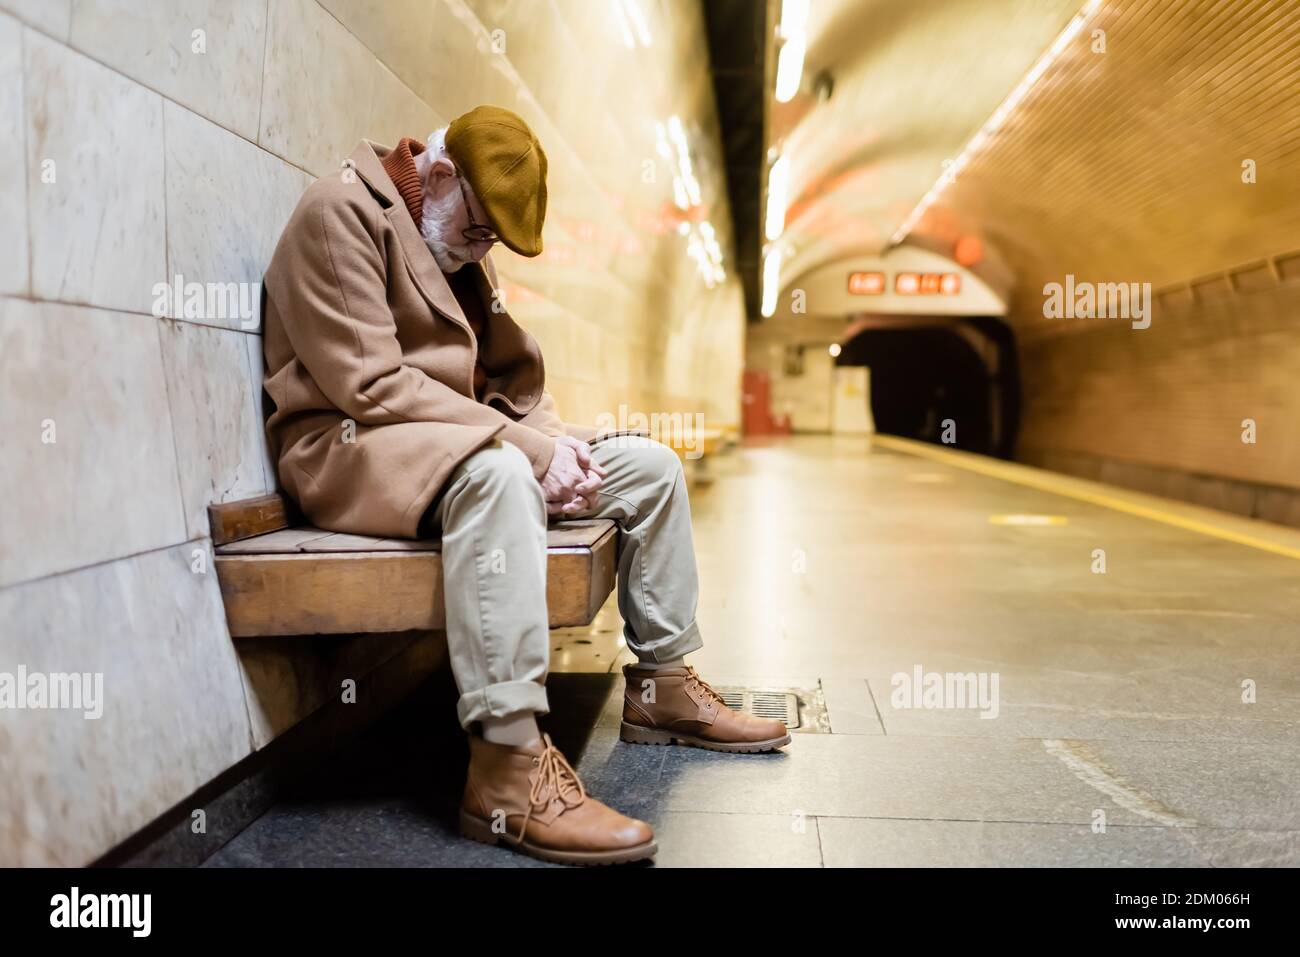 elderly man in autumn outfit sleeping on subway platform bench Stock Photo